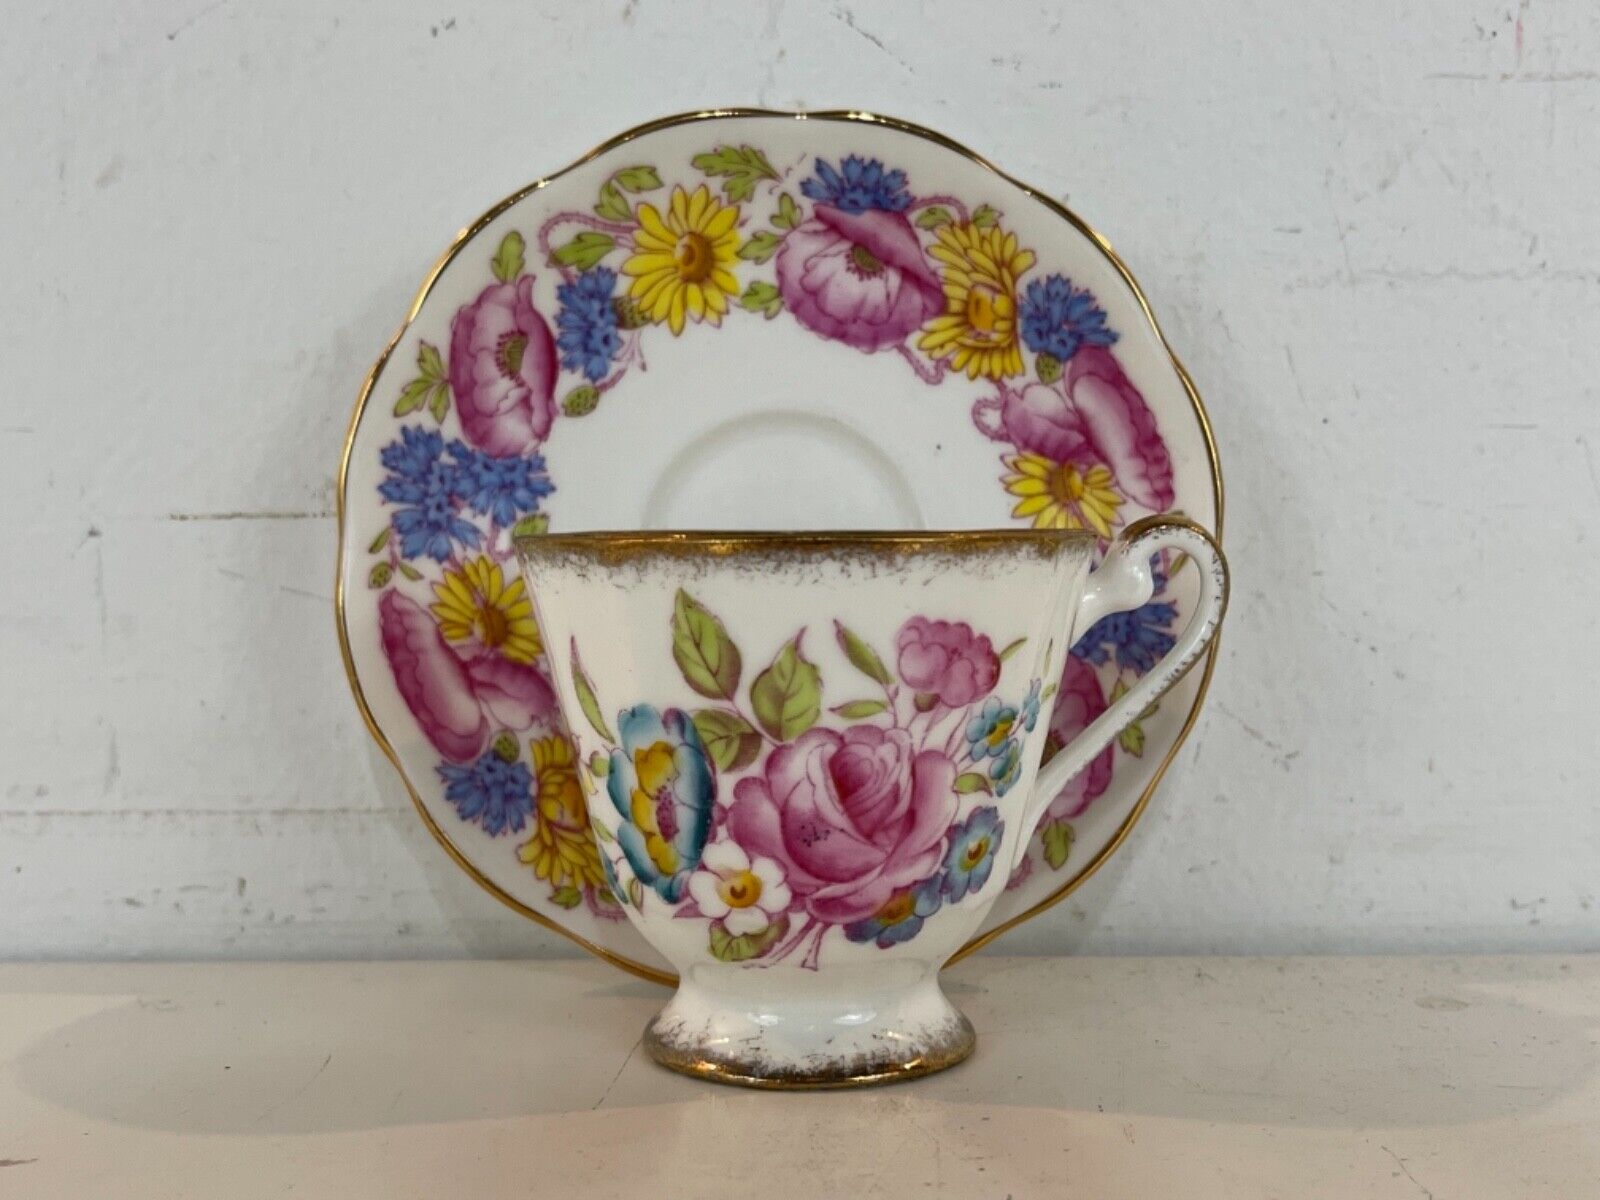 Vintage Roslyn English Porcelain “Ambleside” Cup & Saucer with Floral Decoration